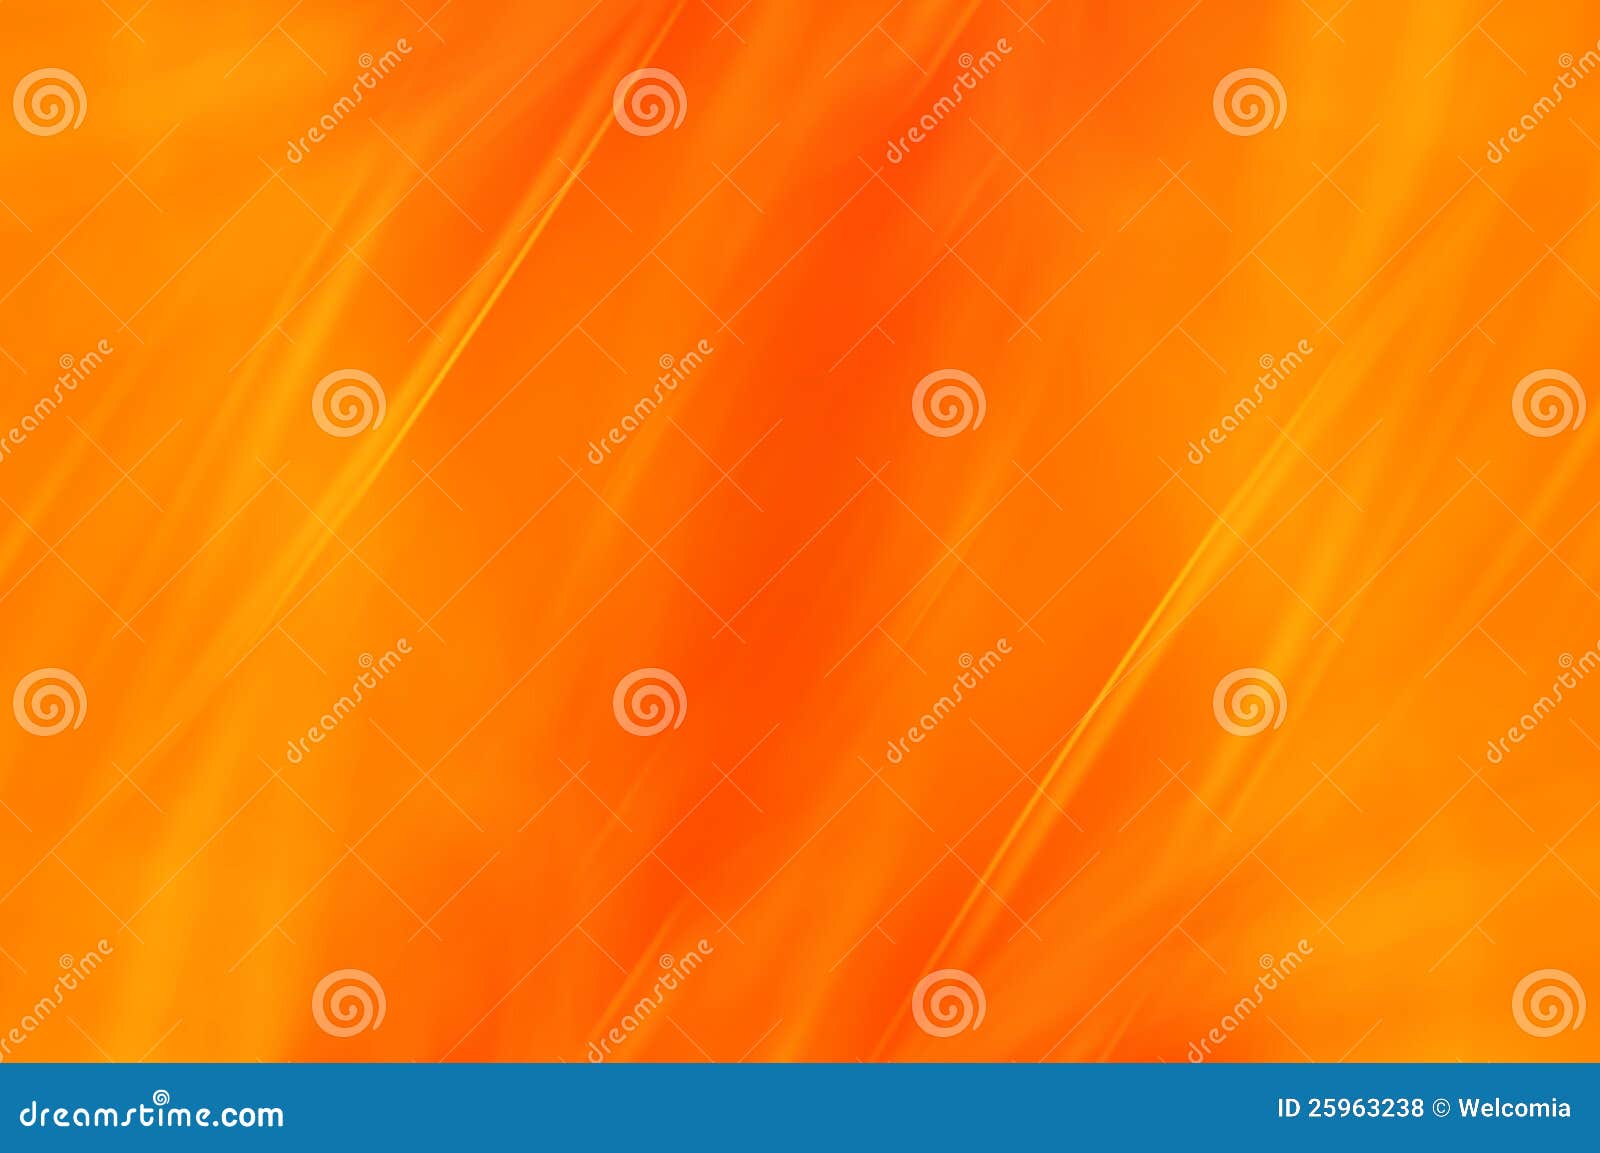 juicy orange background